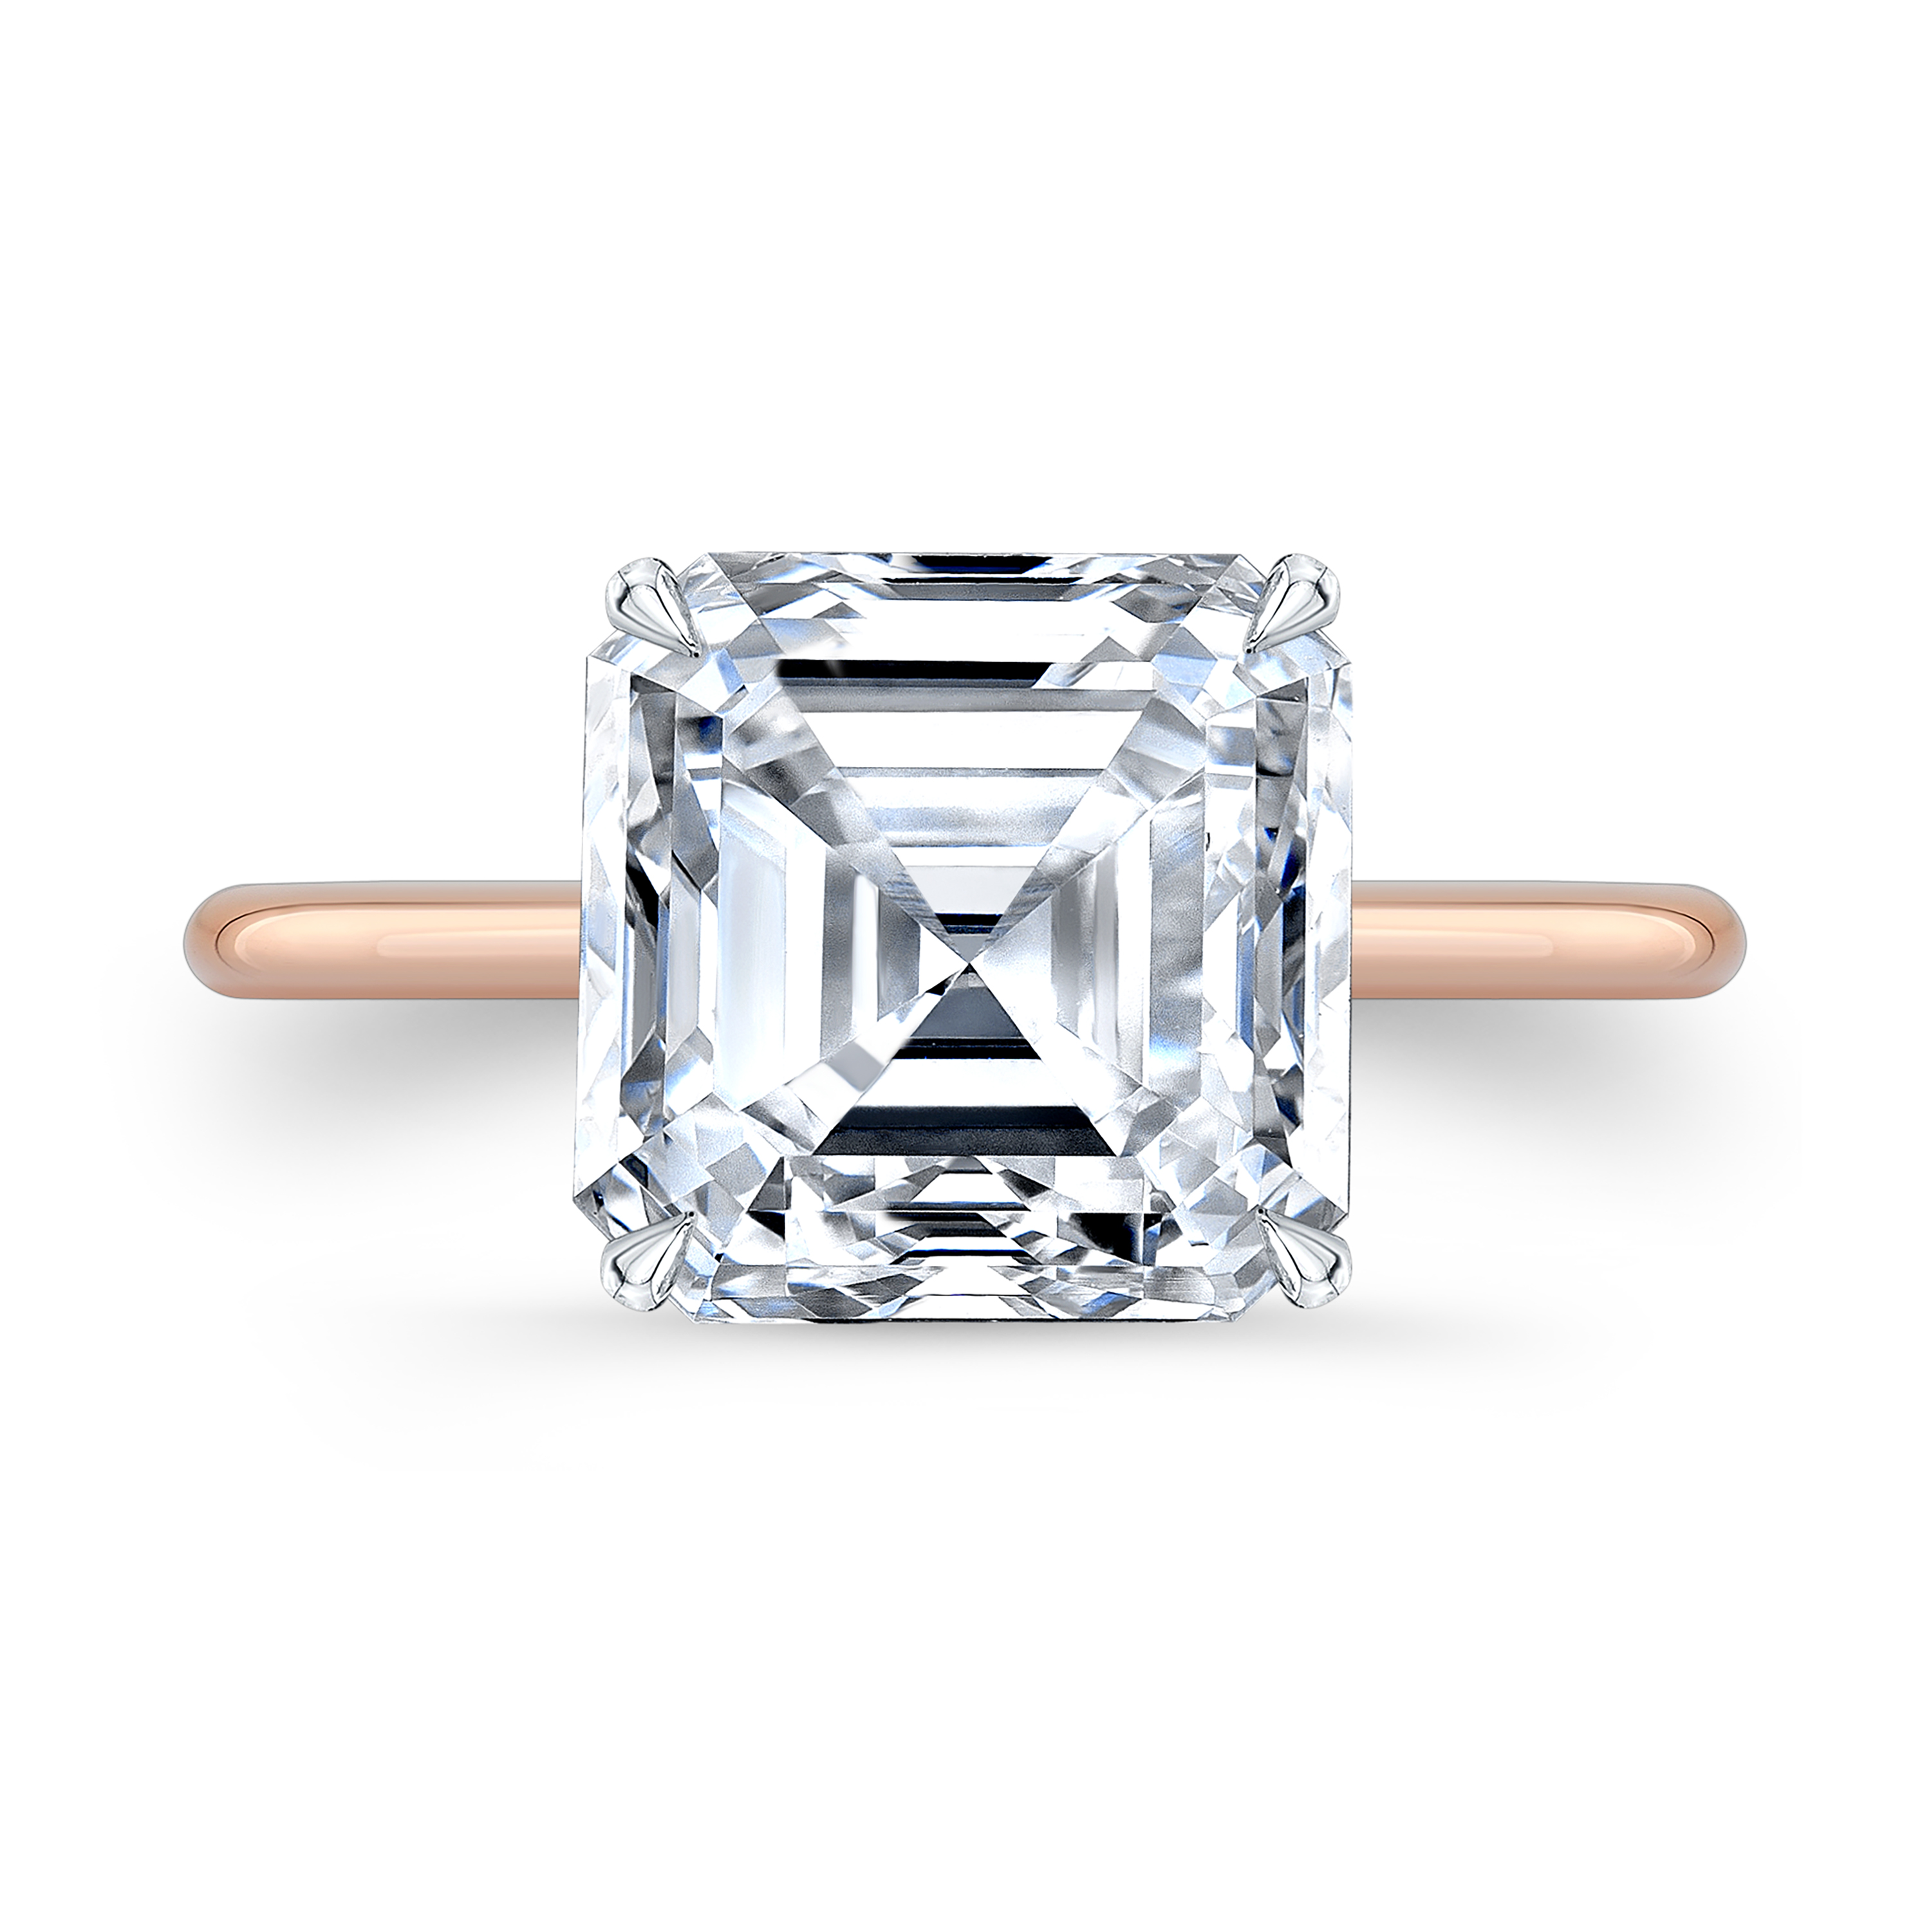 The Best Asscher Cut Diamond Engagement Rings For Every Budget -  International Gem Society